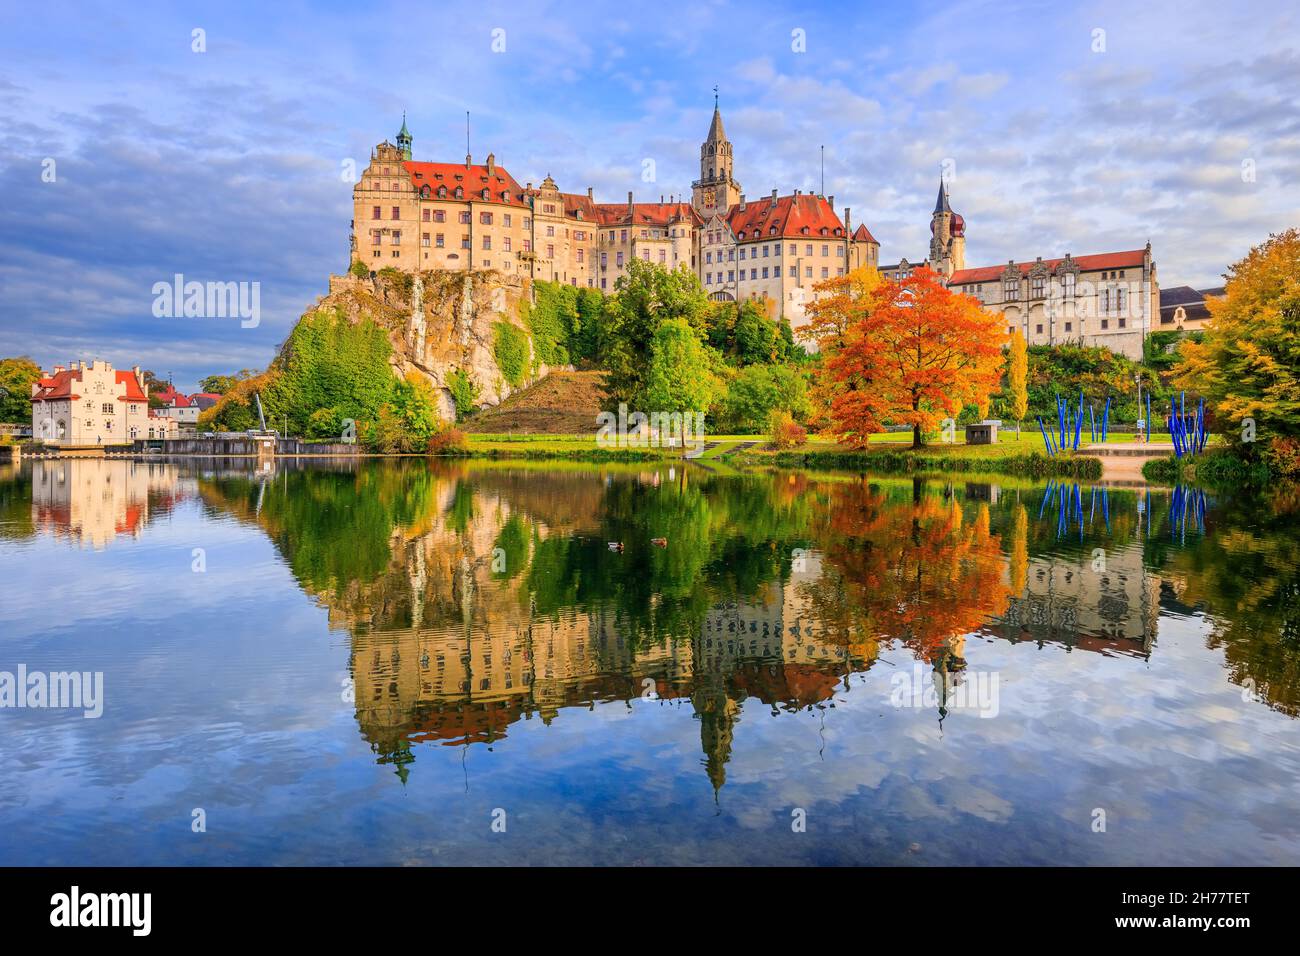 Sigmaringen Castle on the banks of Danube River in Baden-Wurttemberg, Germany. Stock Photo